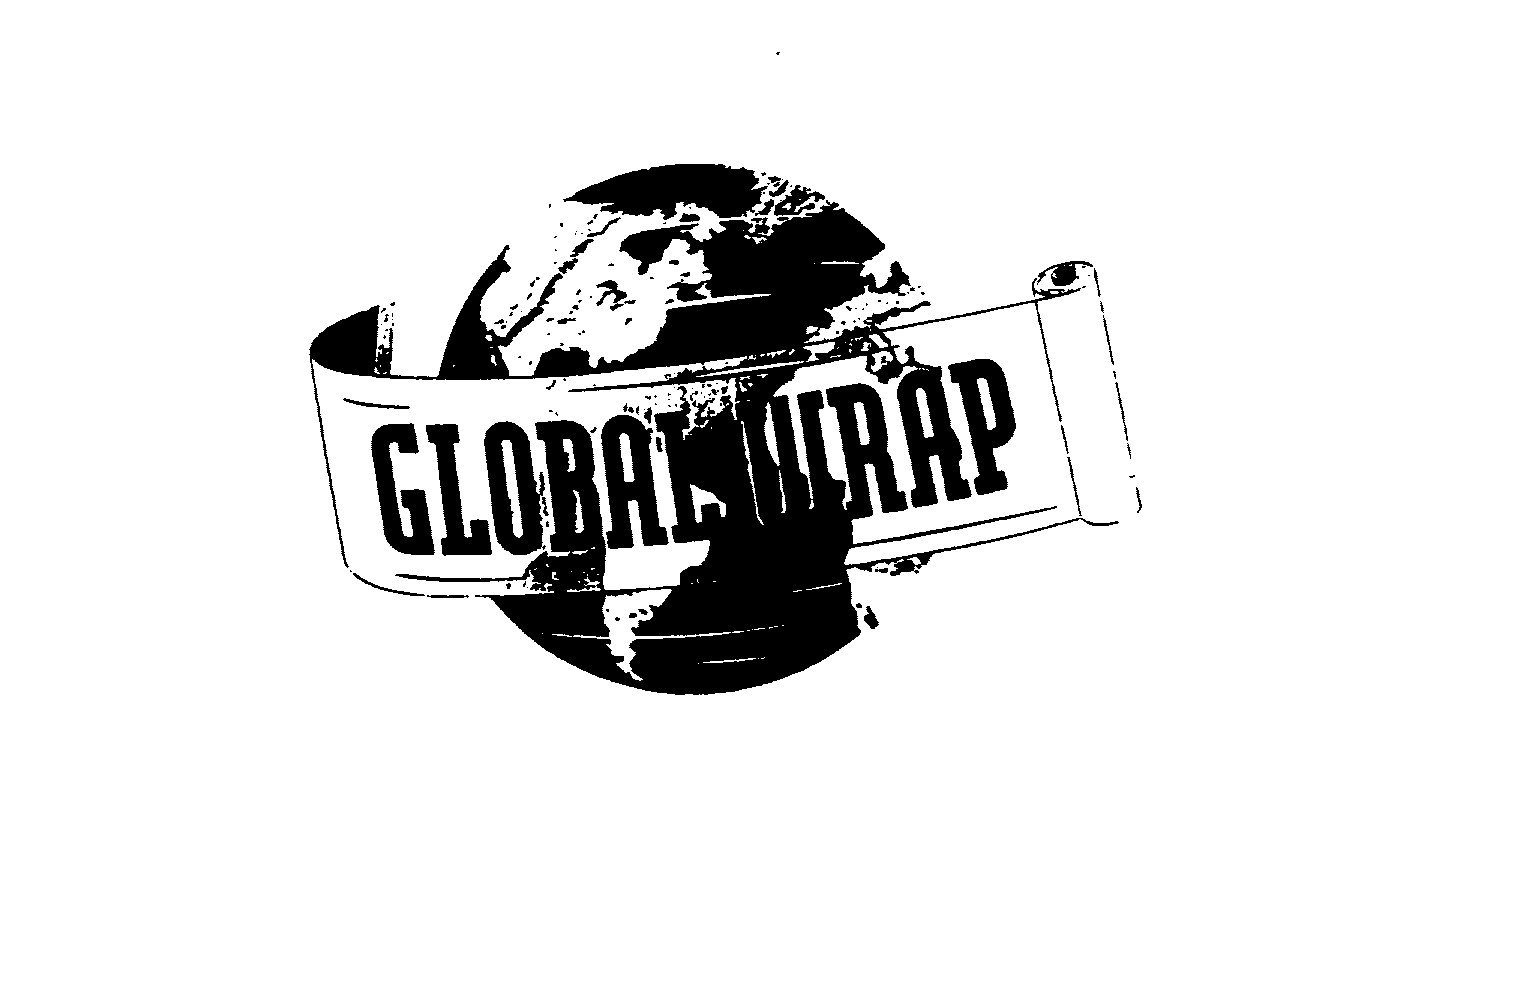 GLOBAL WRAP